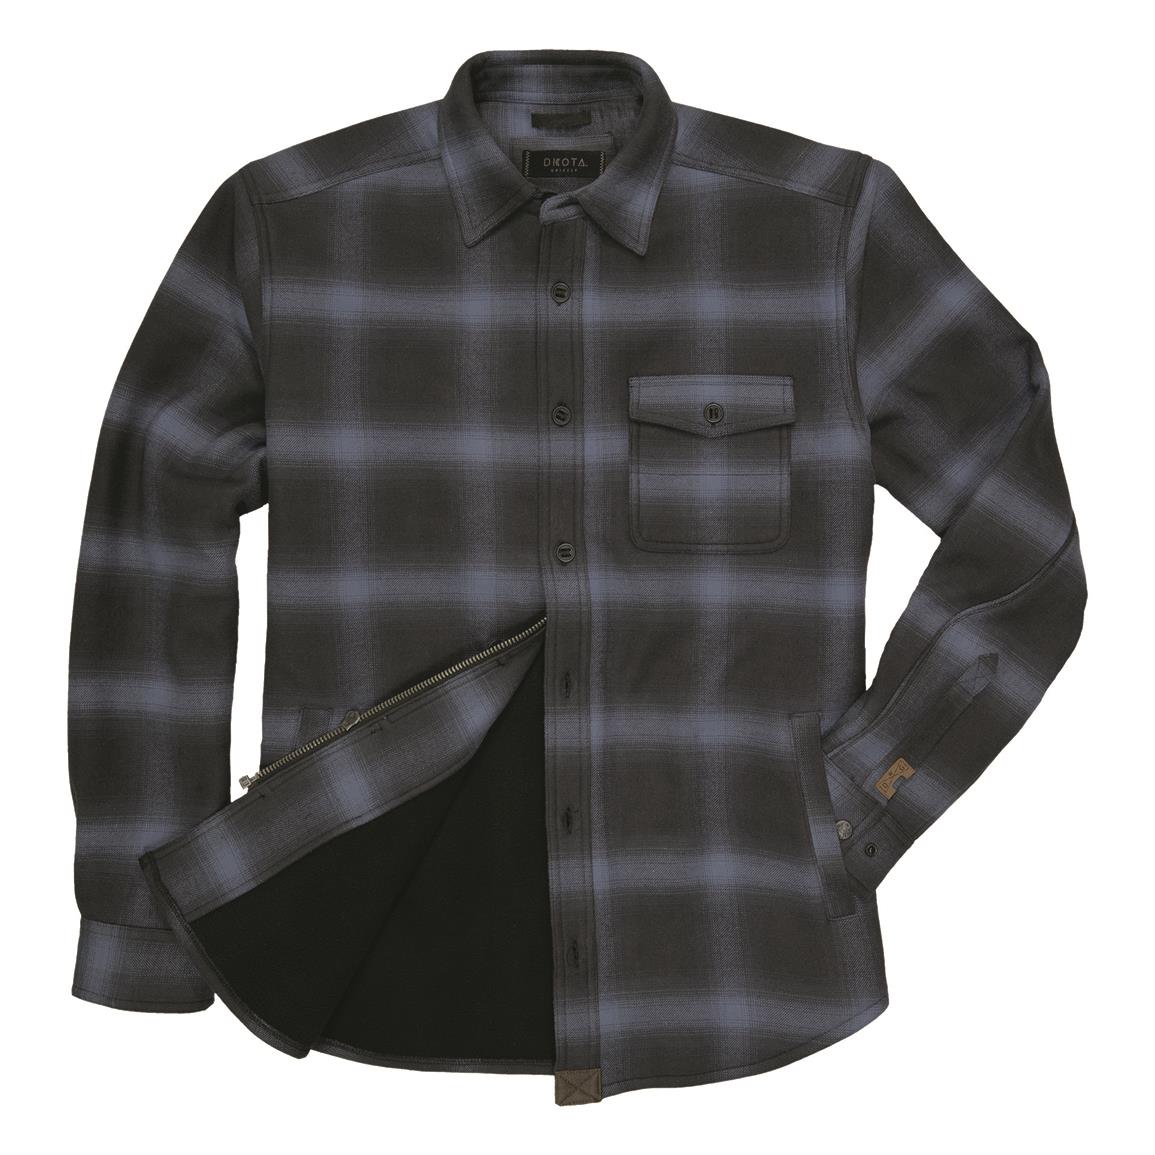 DKOTA GRIZZLY Men's Wade Fleece-lined Shirt Jacket, Midnight Blue